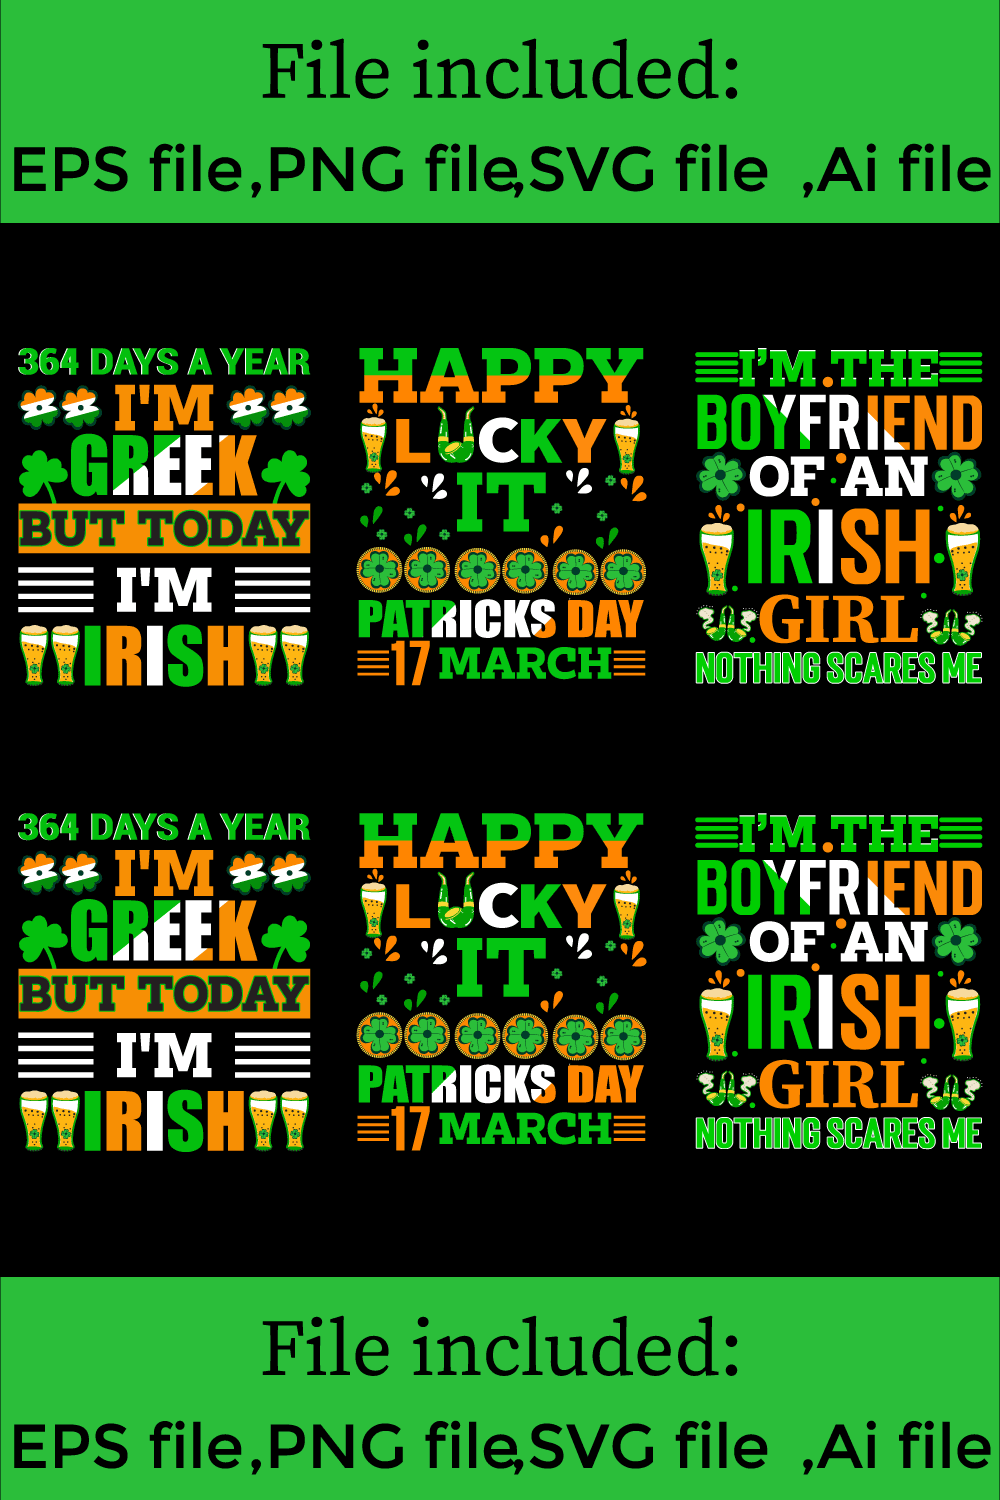 St Patricks day t-shirt design pinterest preview image.